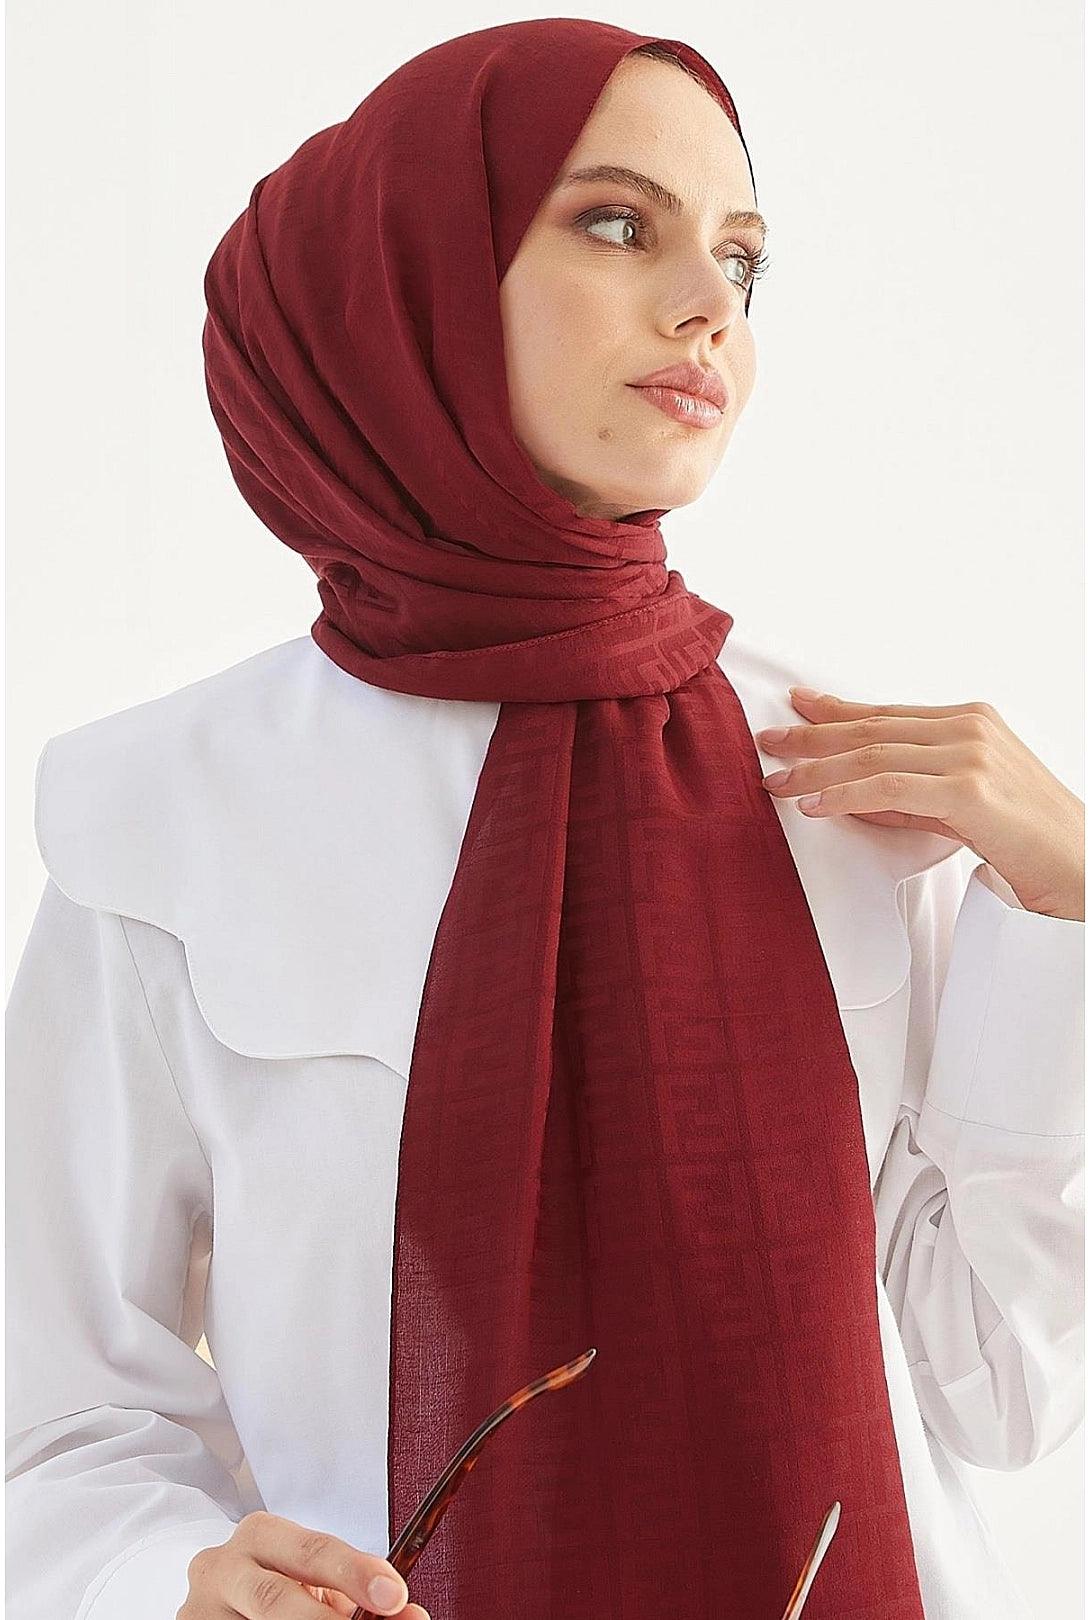 Cotton Hijab Scarf Shawl for Muslim Women -  Claret Red